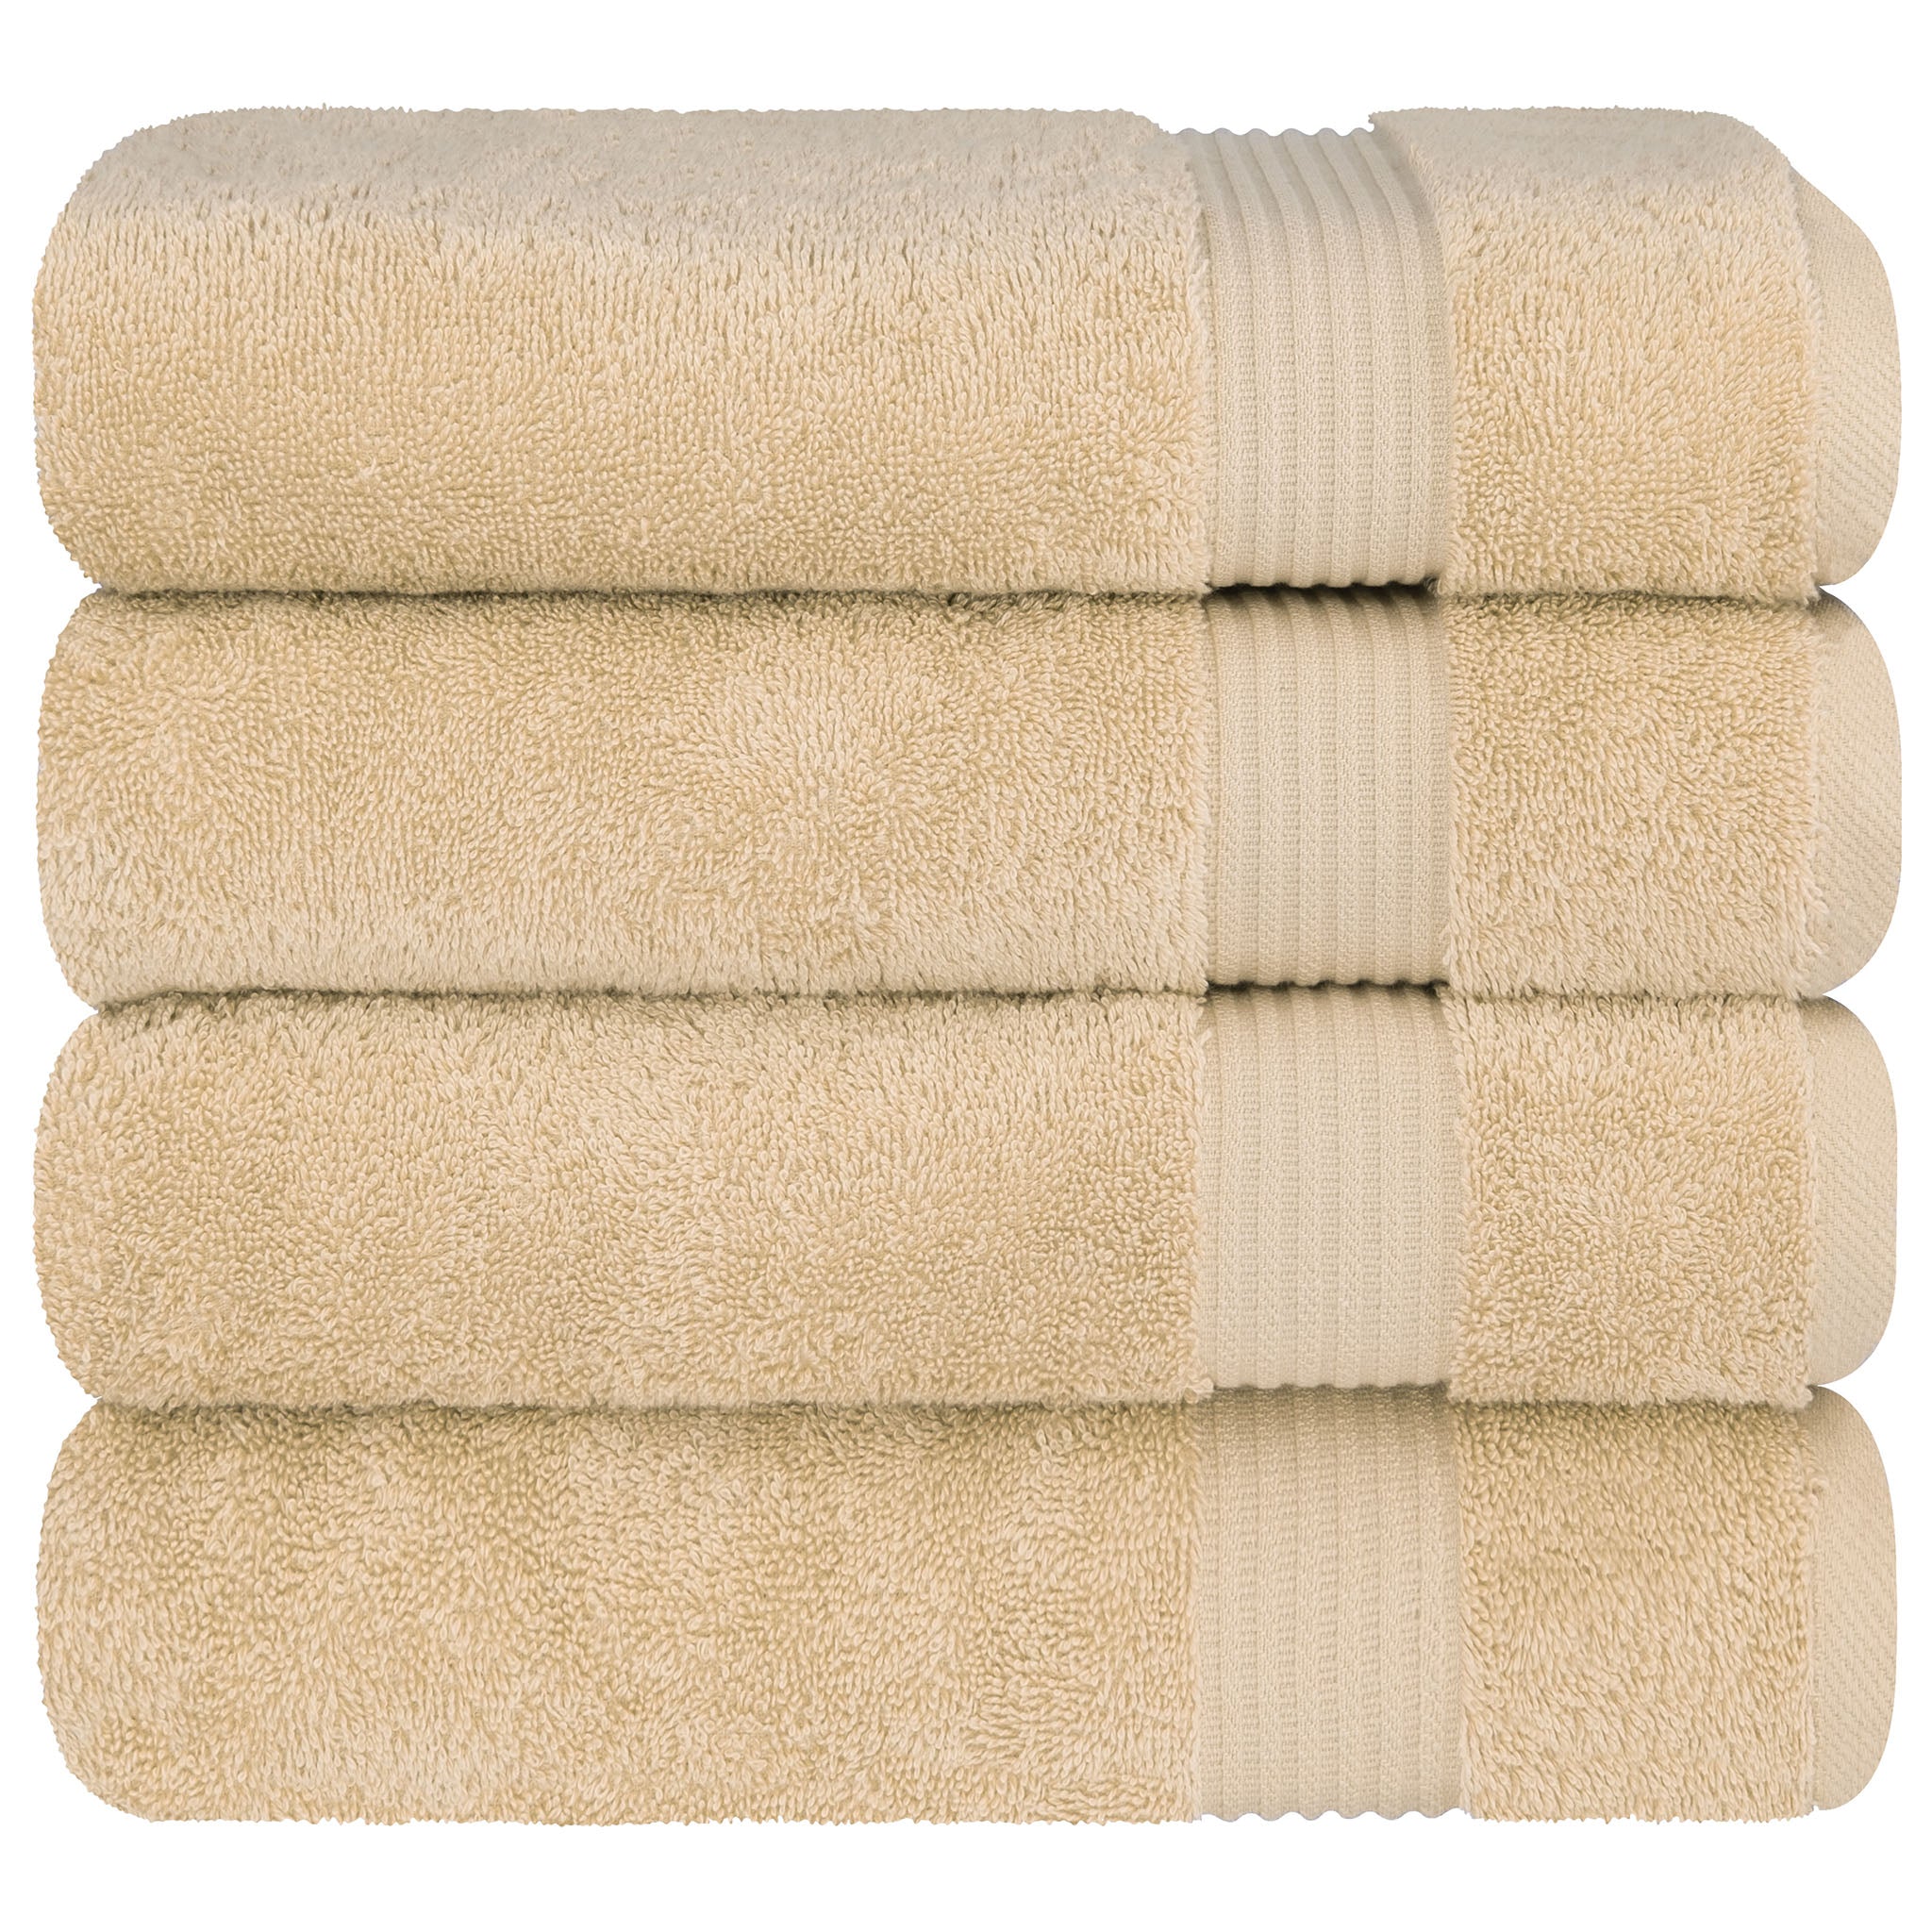 American Soft Linen Bekos 100% Cotton Turkish Towels, 4 Piece Bath Towel Set -sand-taupe-06